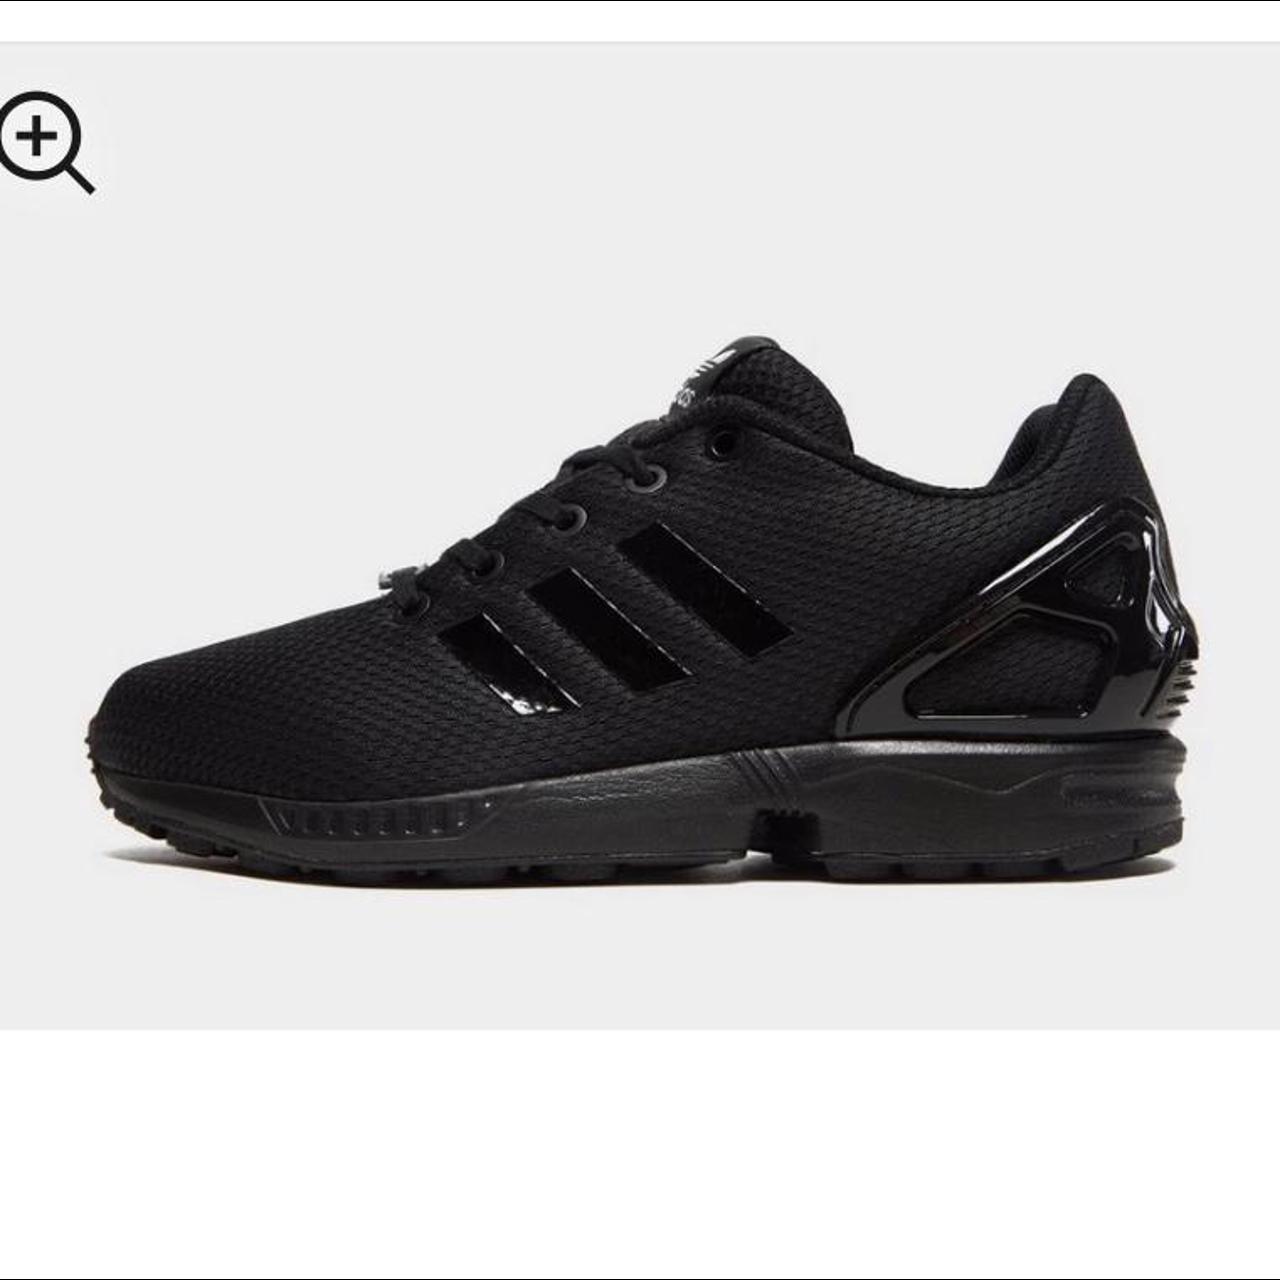 Black Adidas zx flux size 5.5 #adidas 